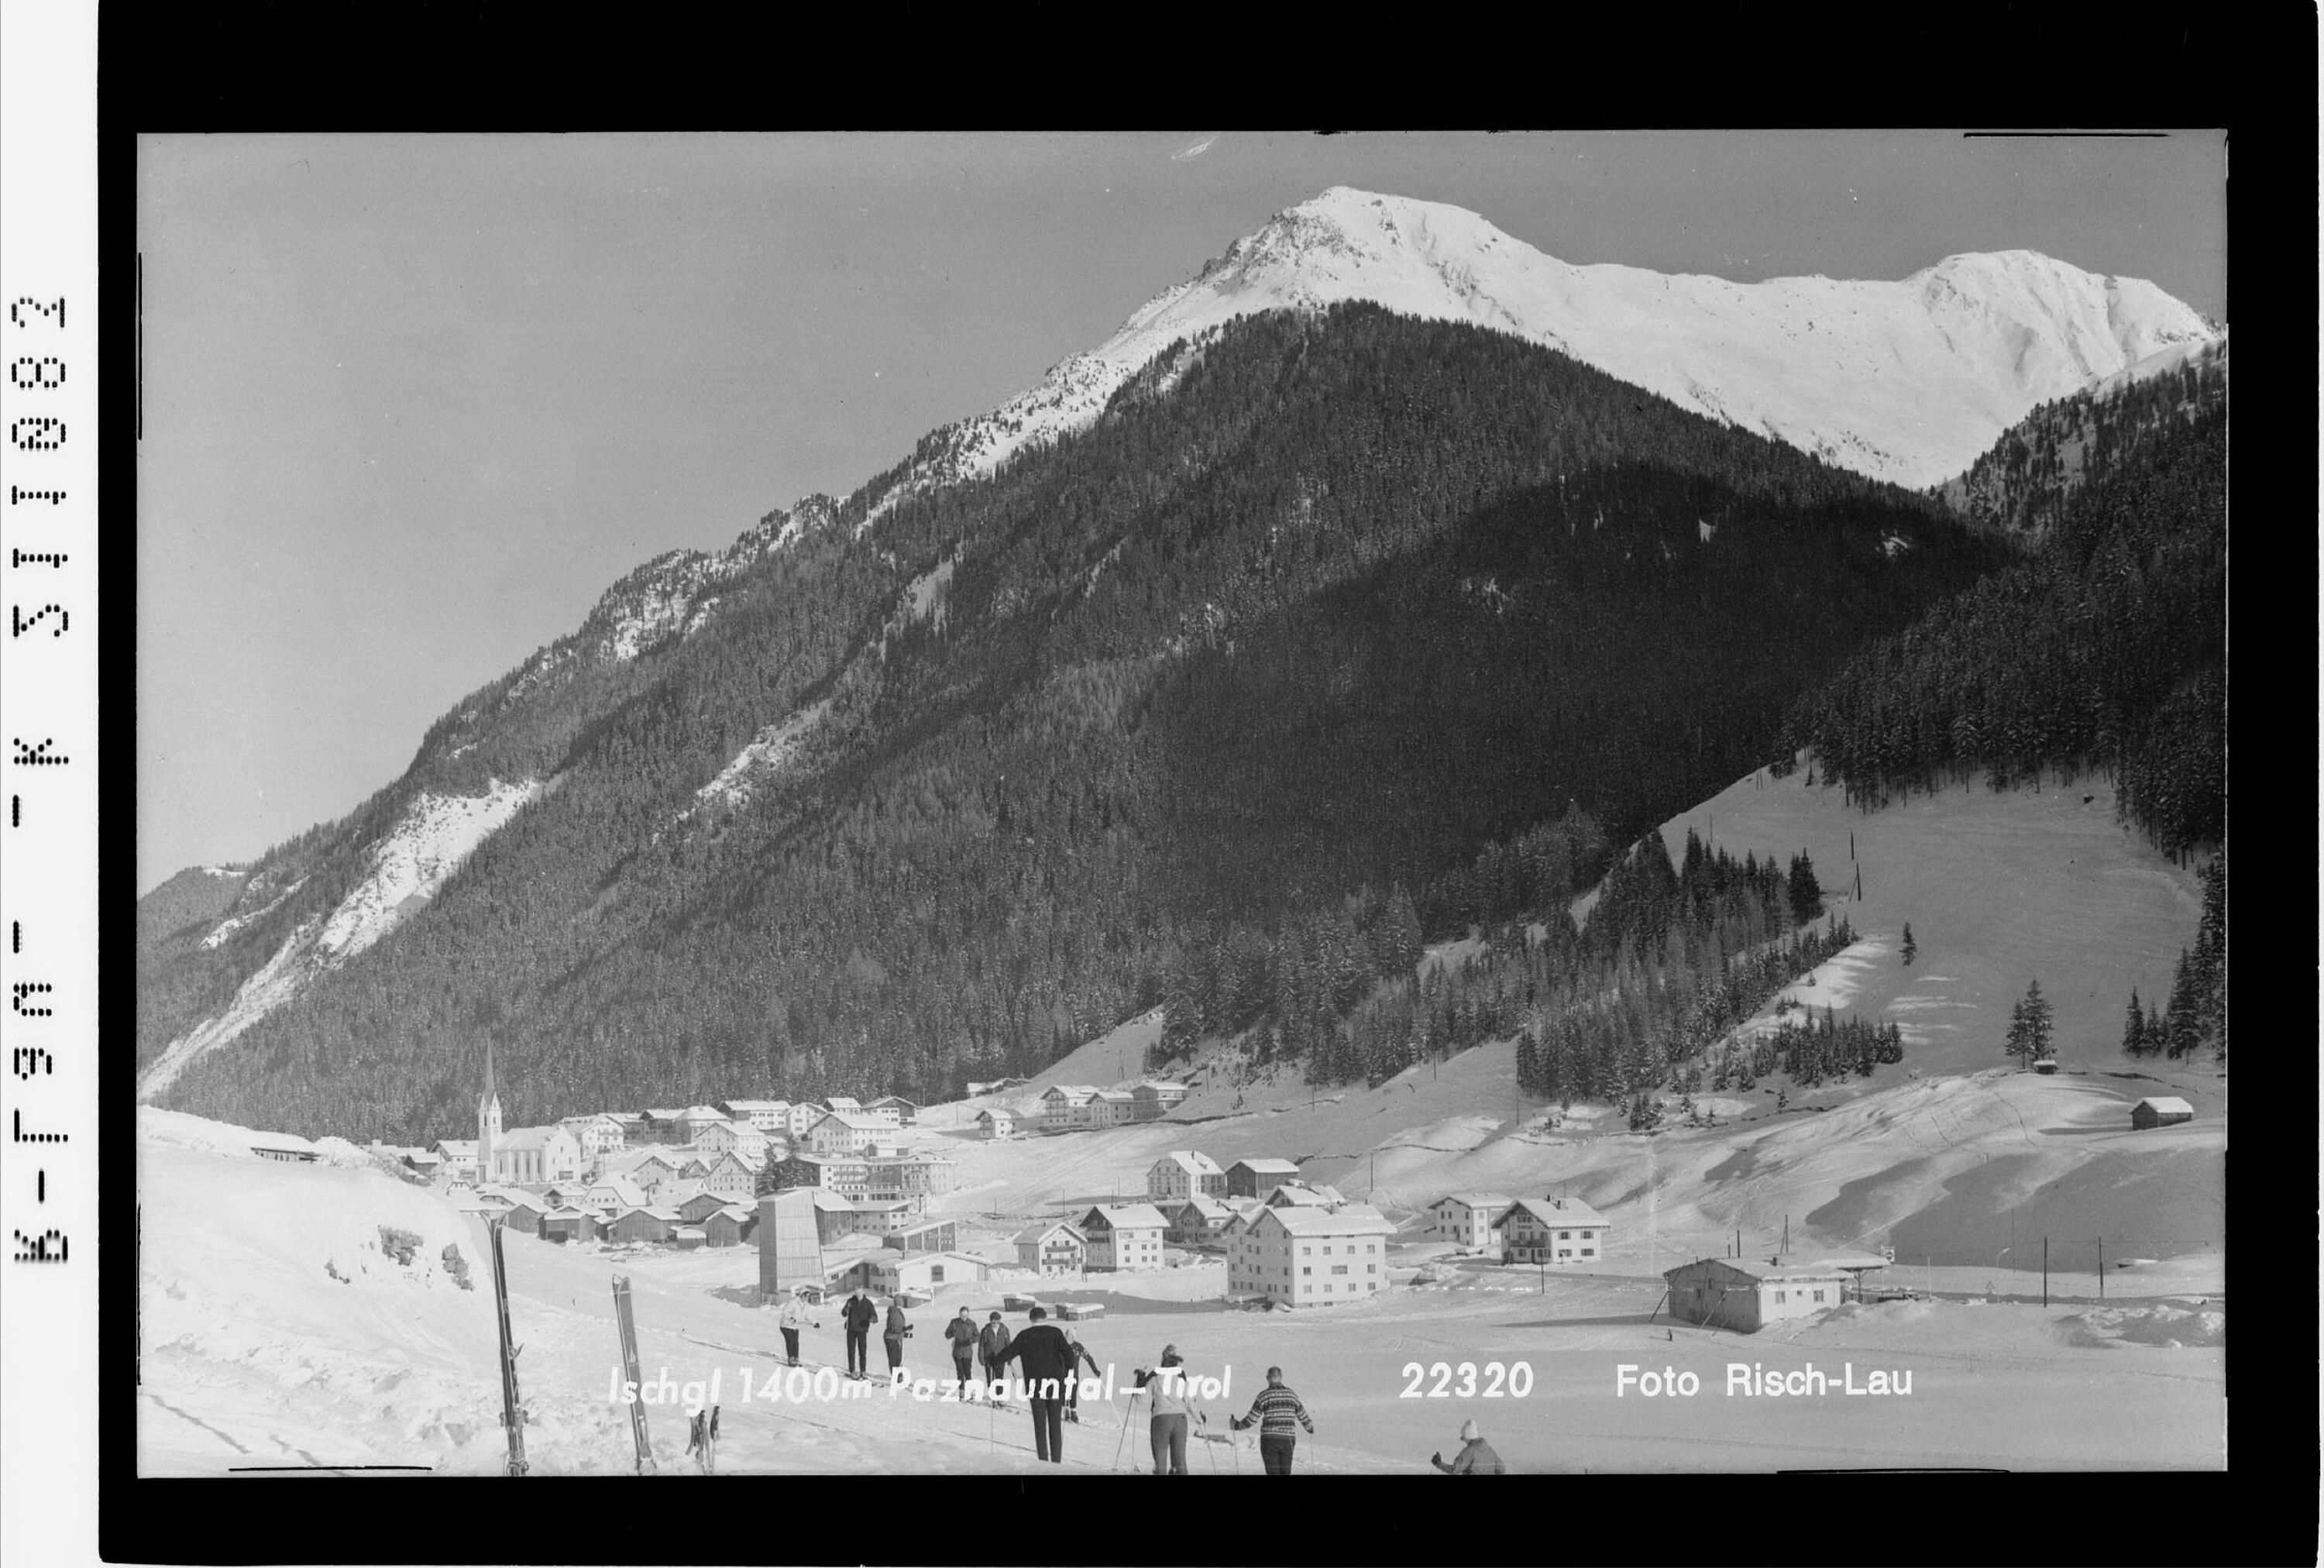 Ischgl 1400 m Paznauntal - Tirol></div>


    <hr>
    <div class=